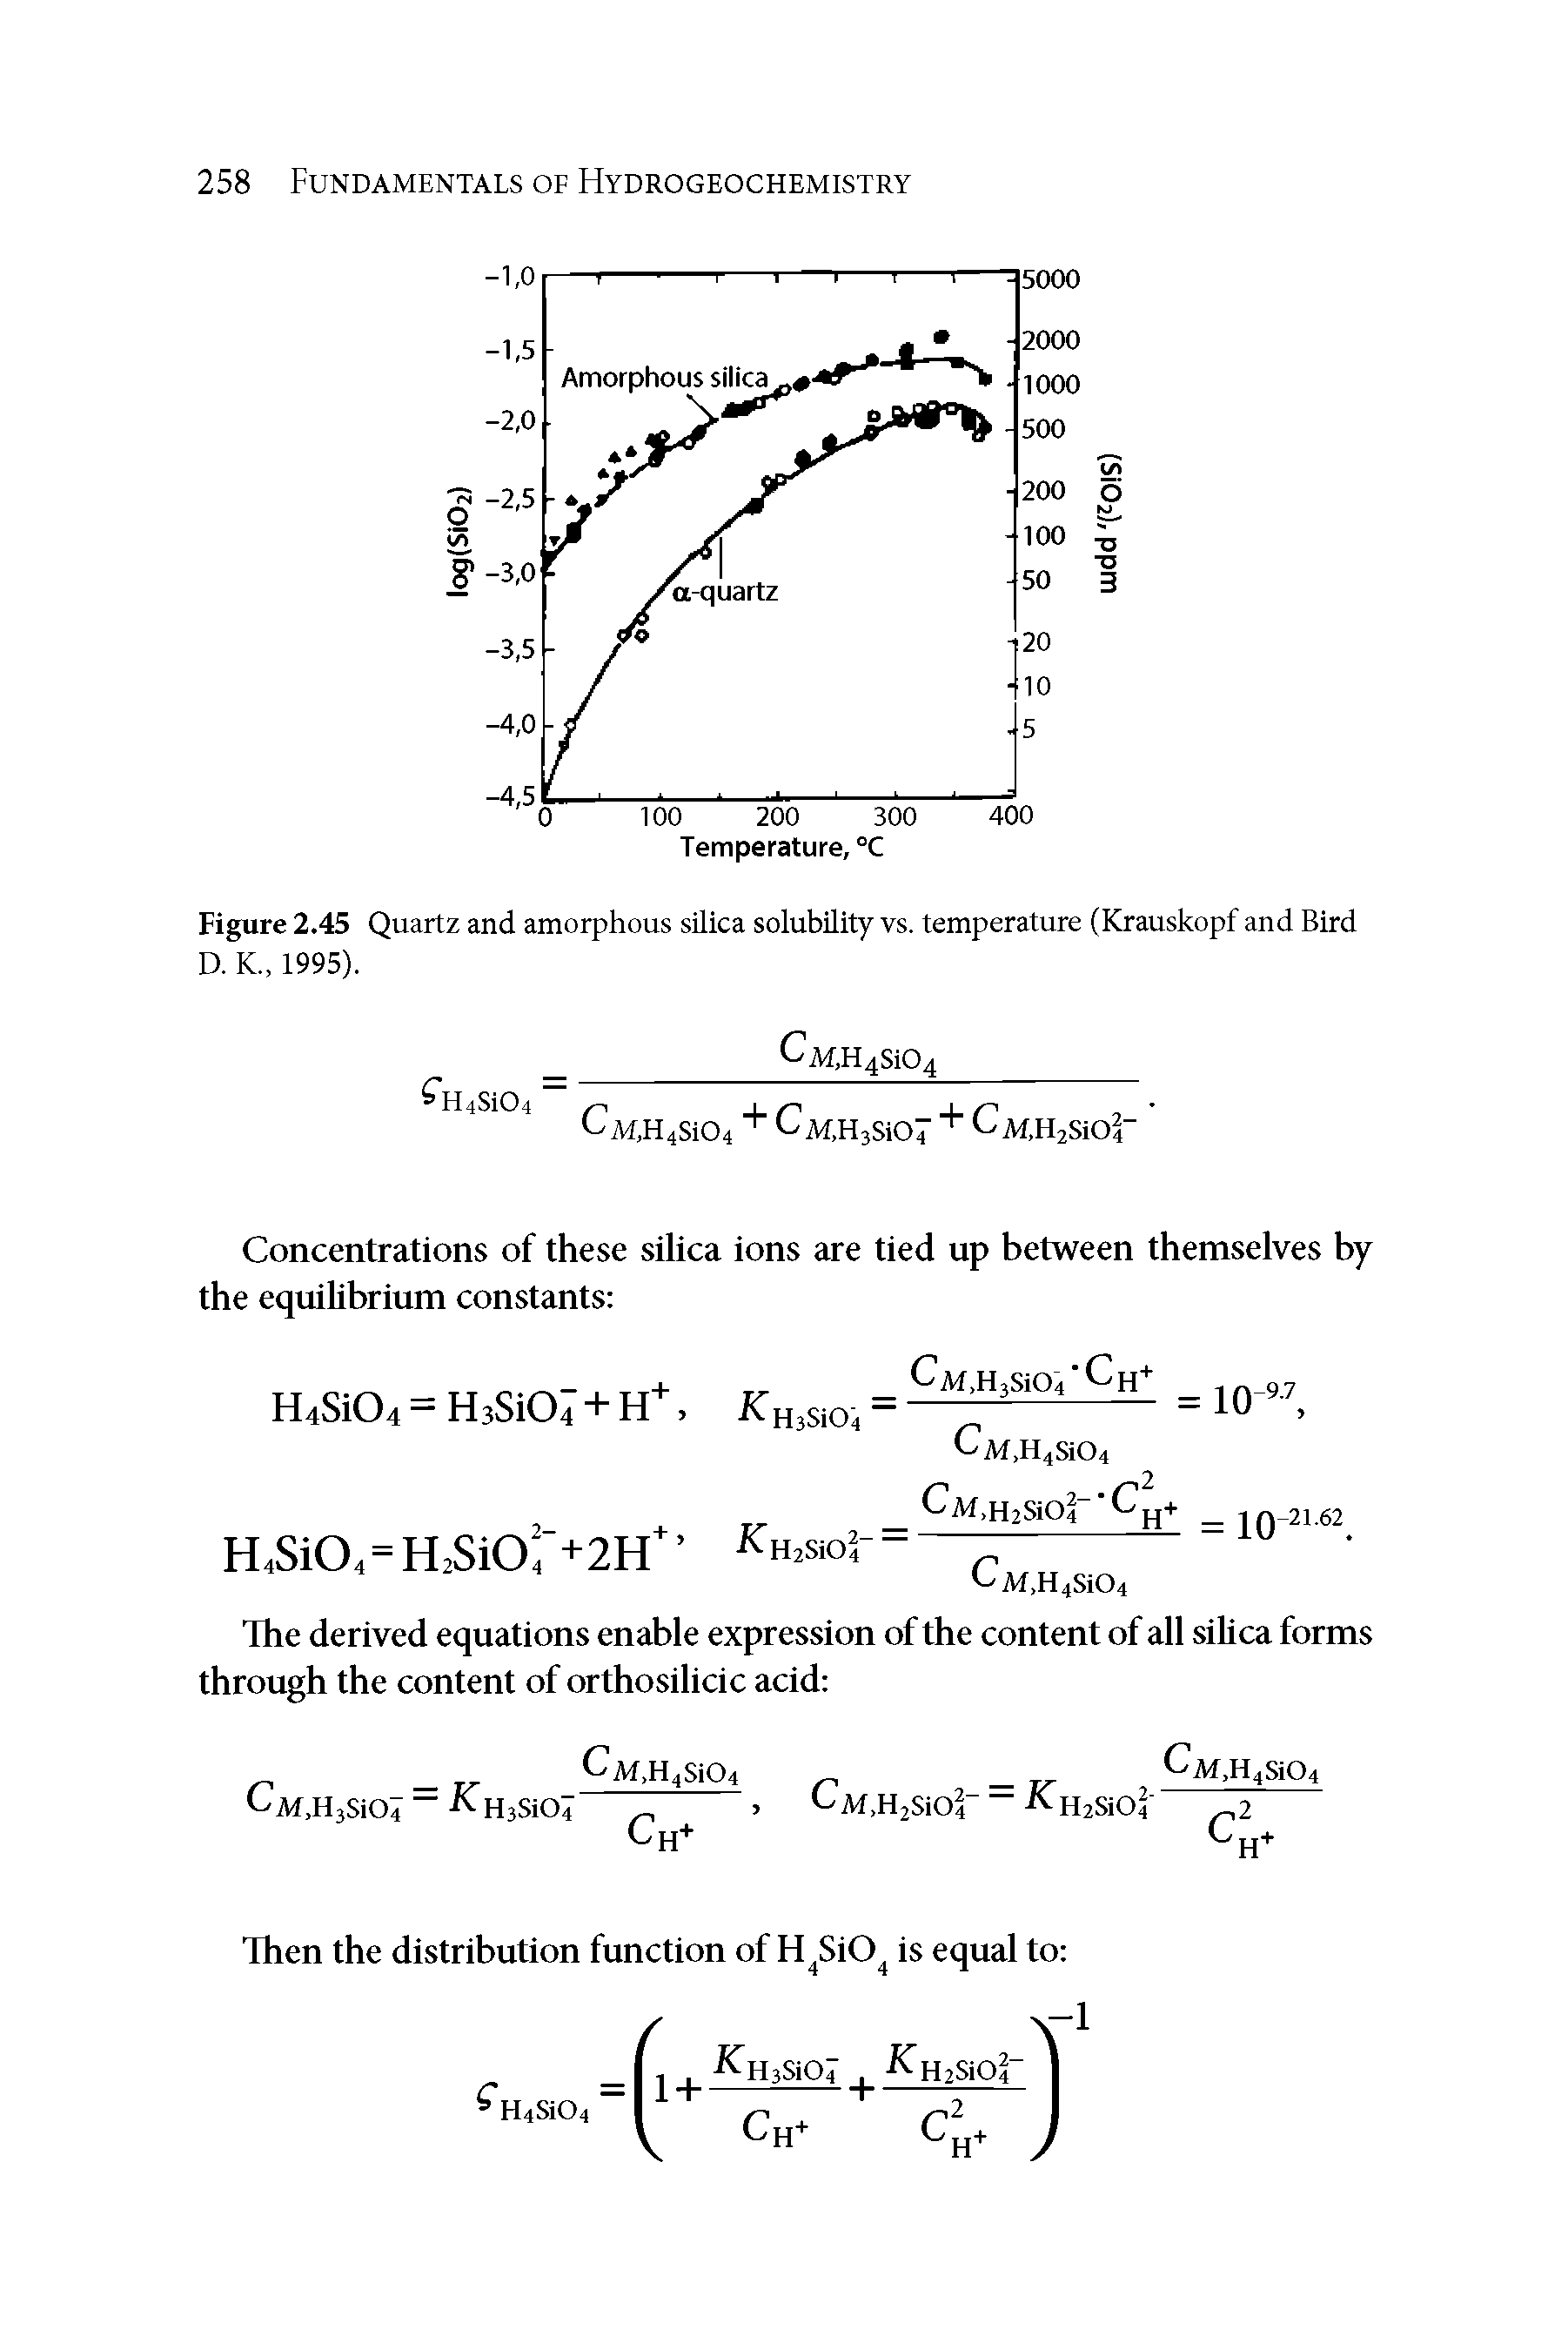 Figure 2.45 Quartz and amorphous silica solubility vs. temperature (Krauskopf and Bird D. K., 1995).